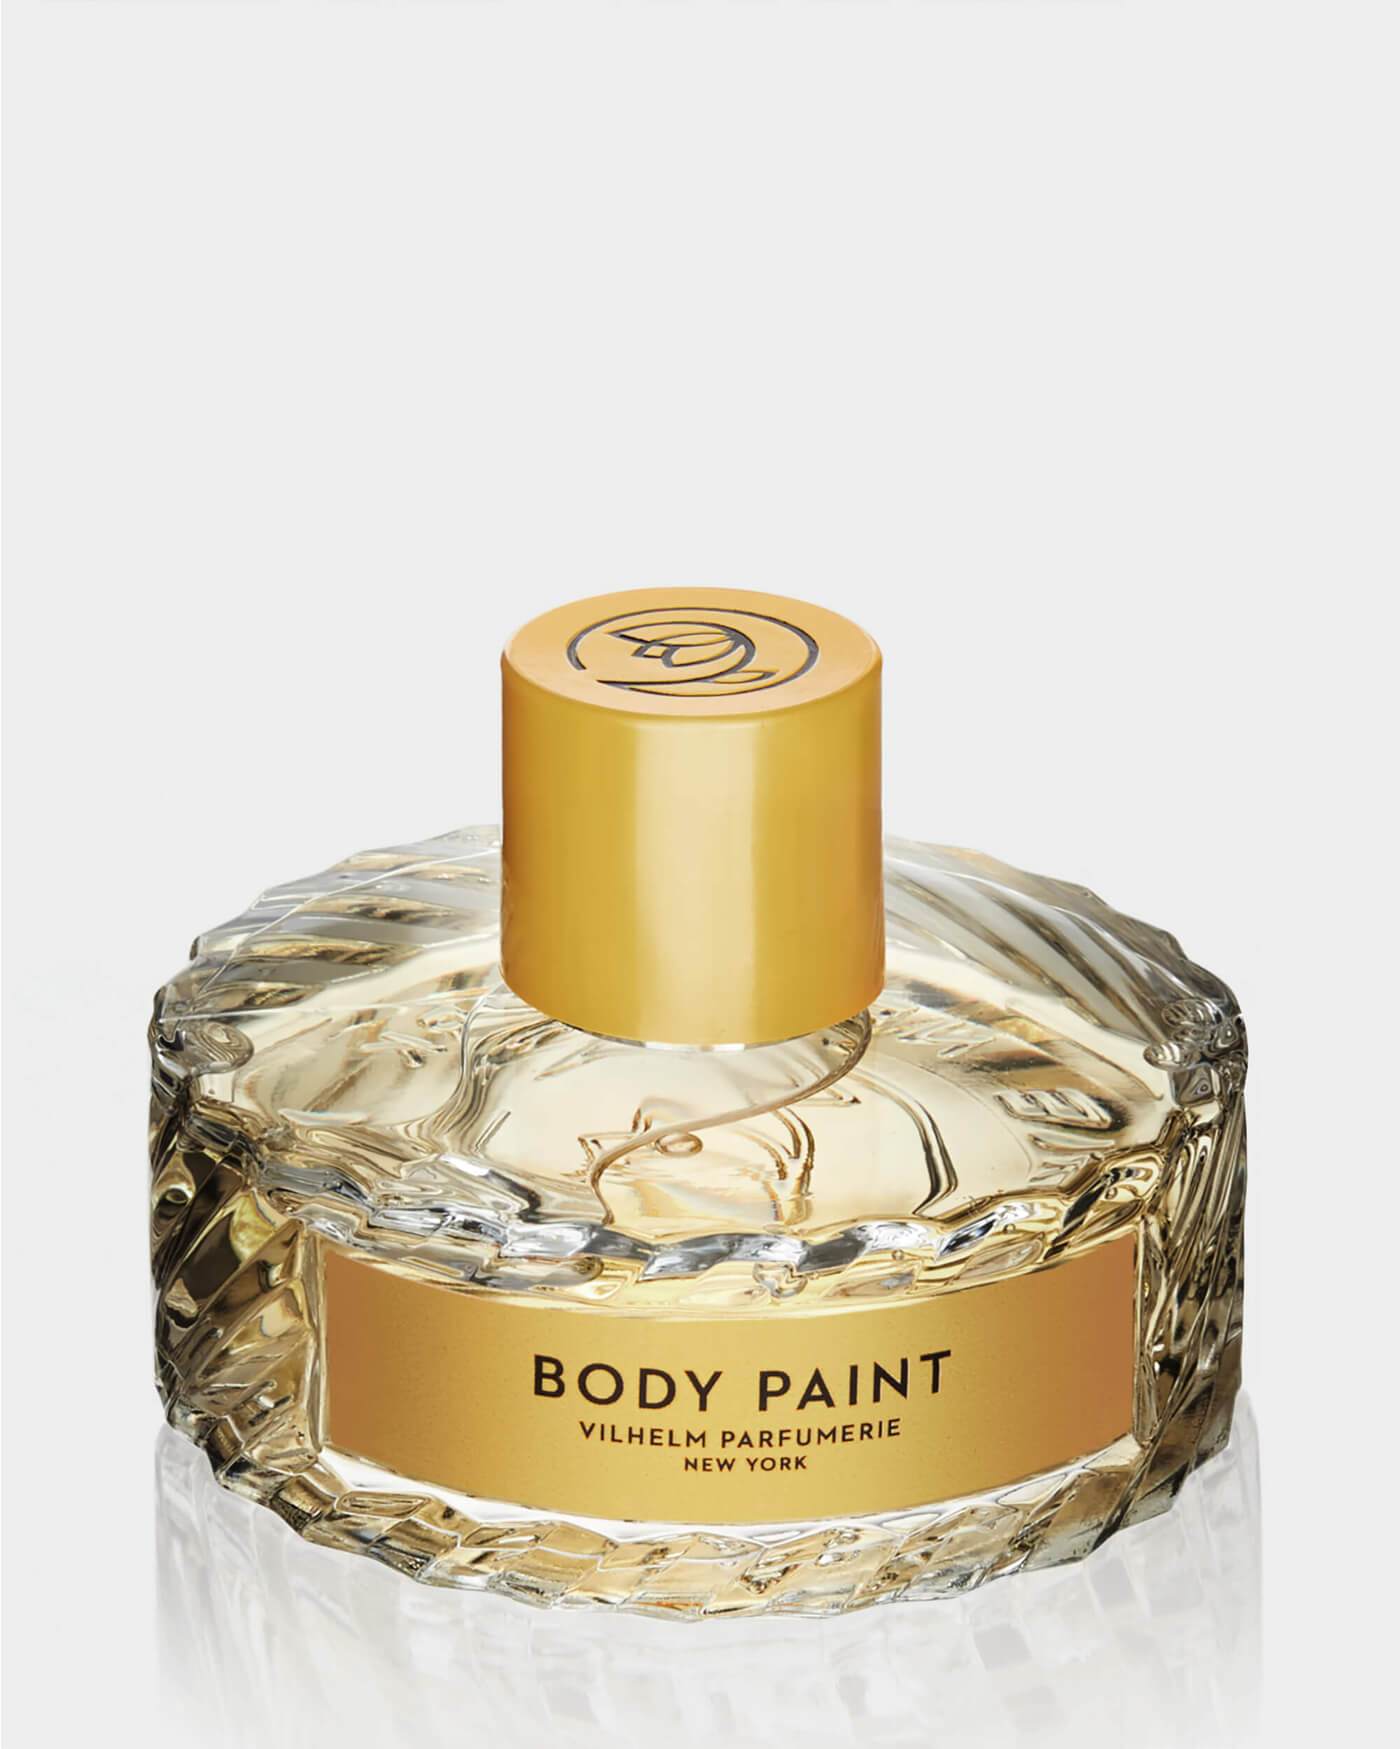 BODY PAINT - Vilhelm Parfumerie